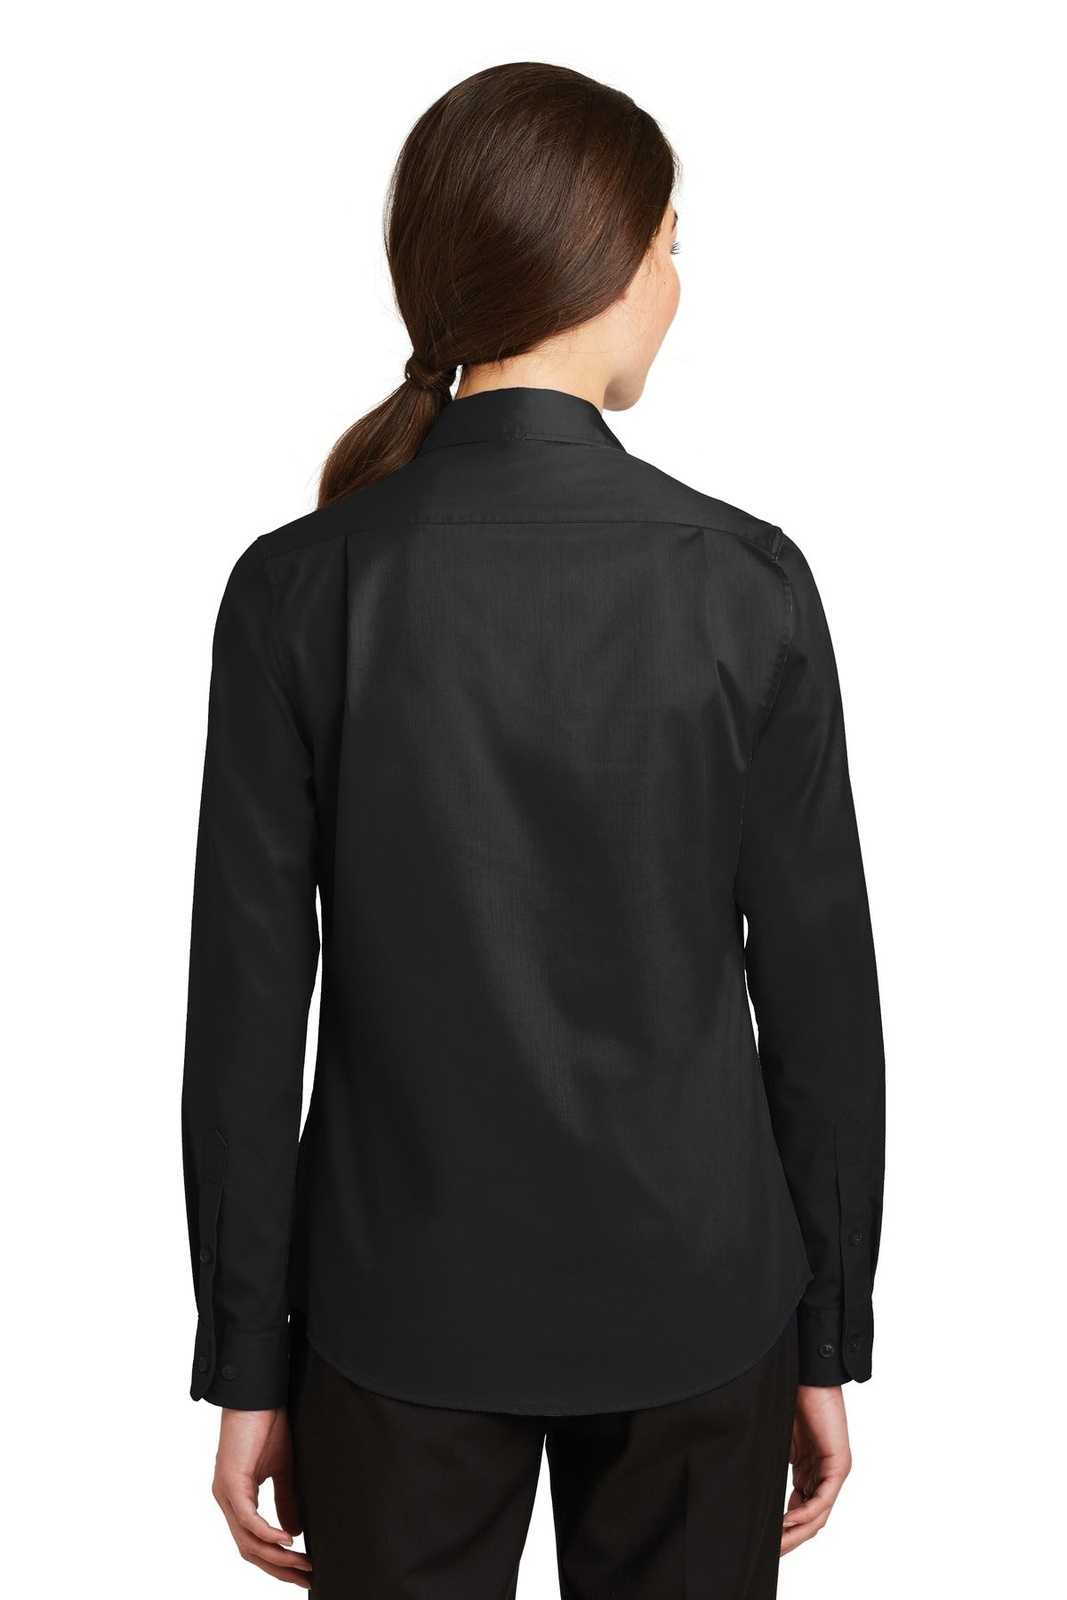 Port Authority L663 Ladies Superpro Twill Shirt - Black - HIT a Double - 2